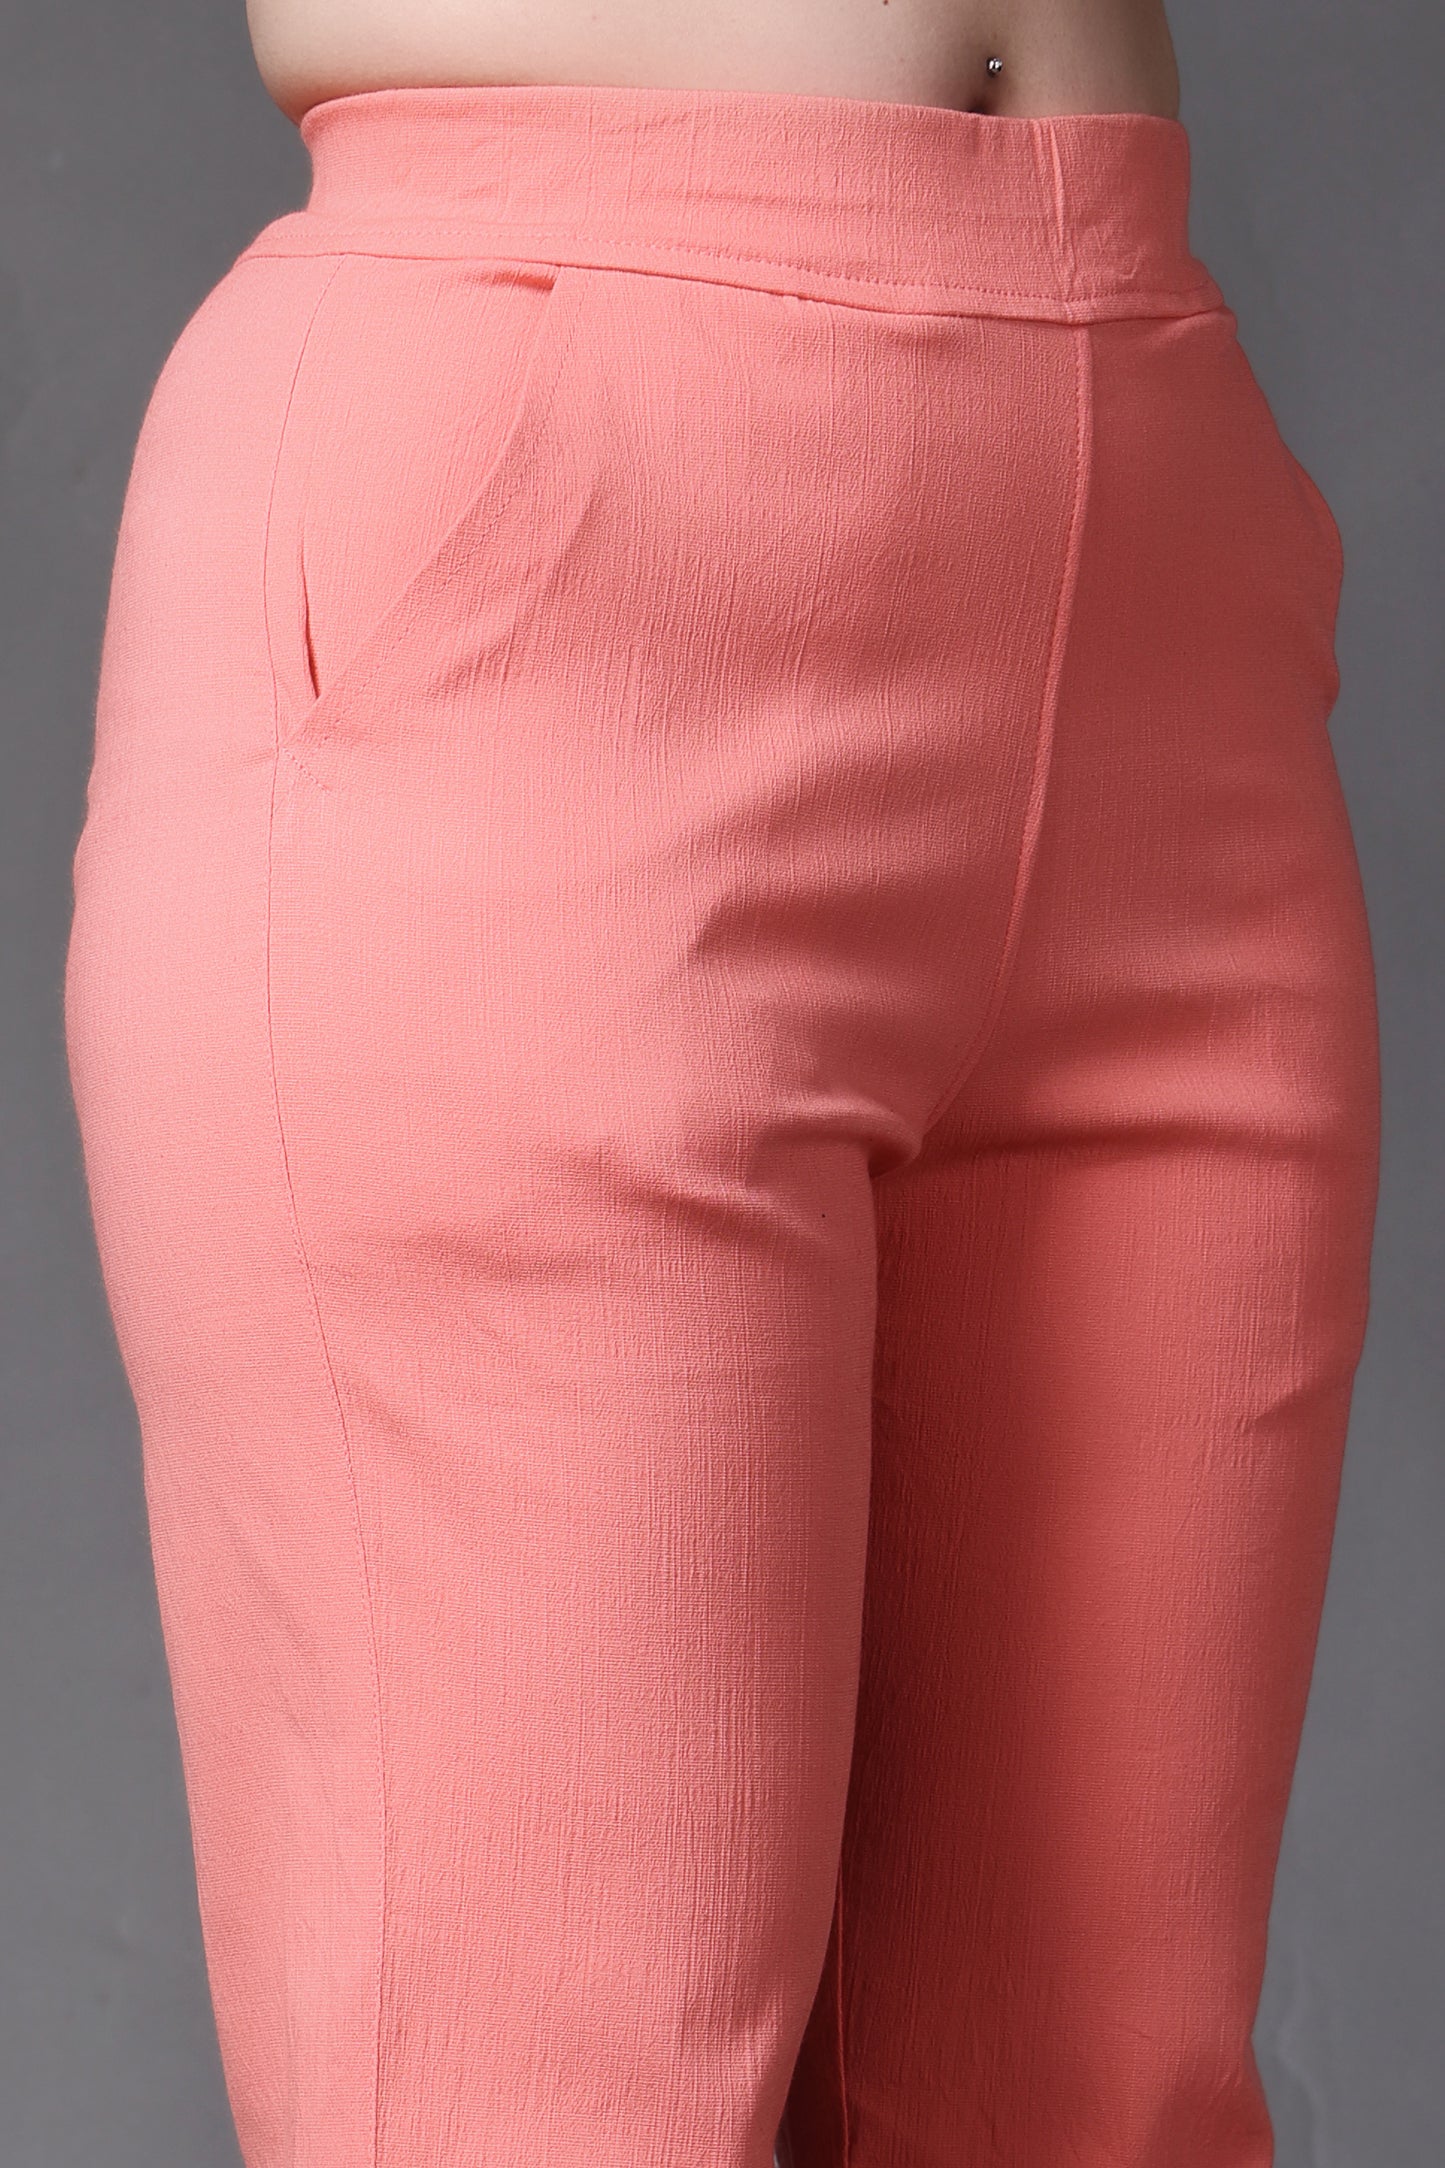 Lycra Pants For Ladies